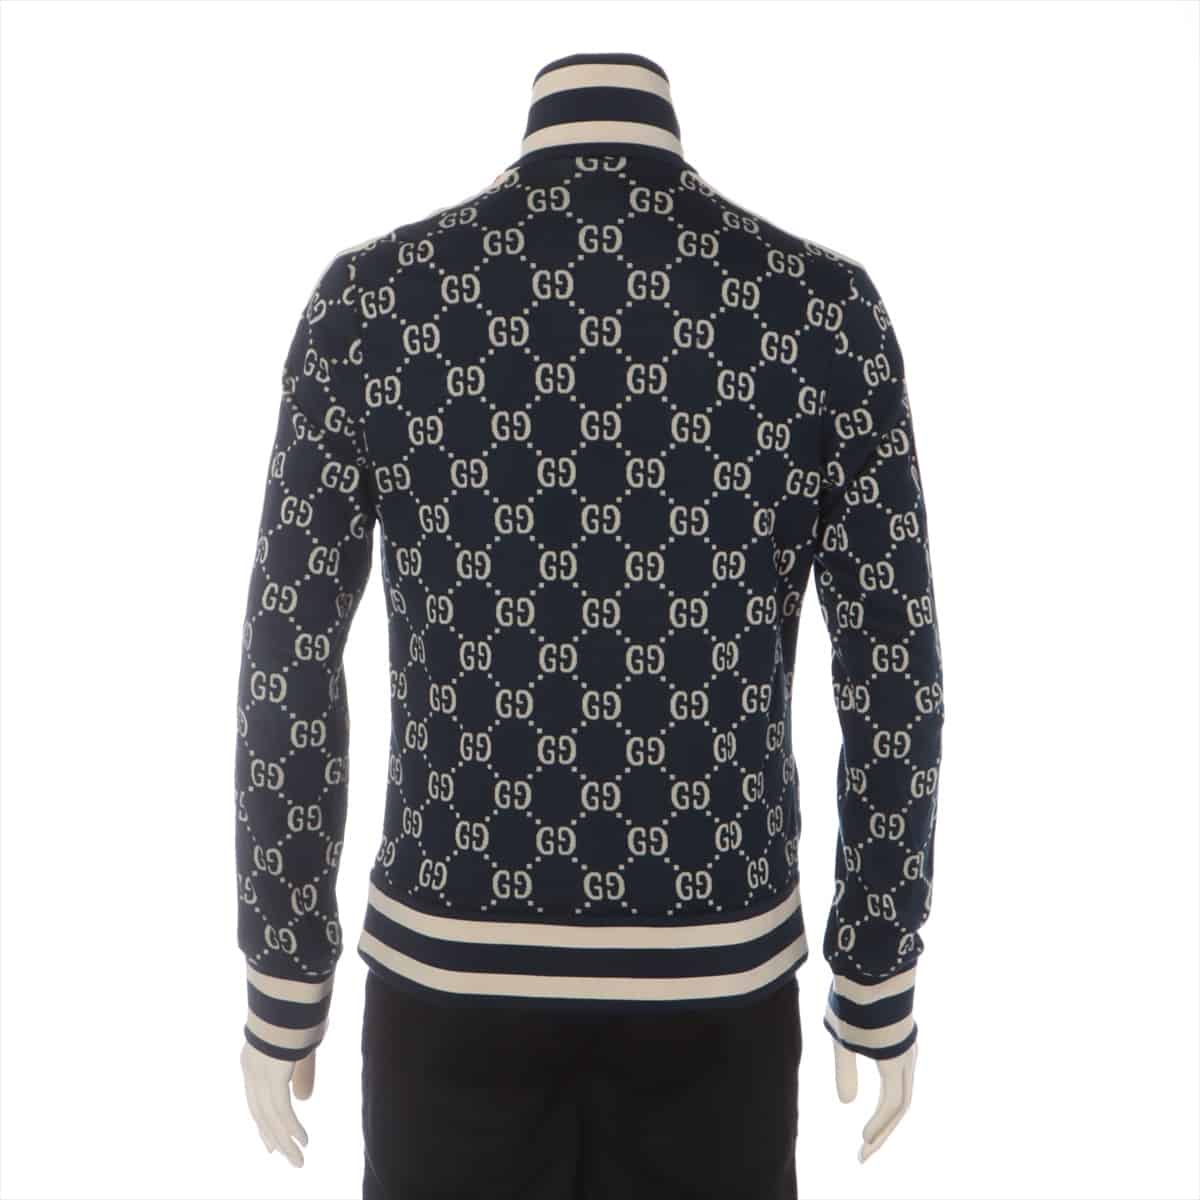 Gucci 18AW Cotton Sweatsuit S Men's Navy blue  GG jacquard